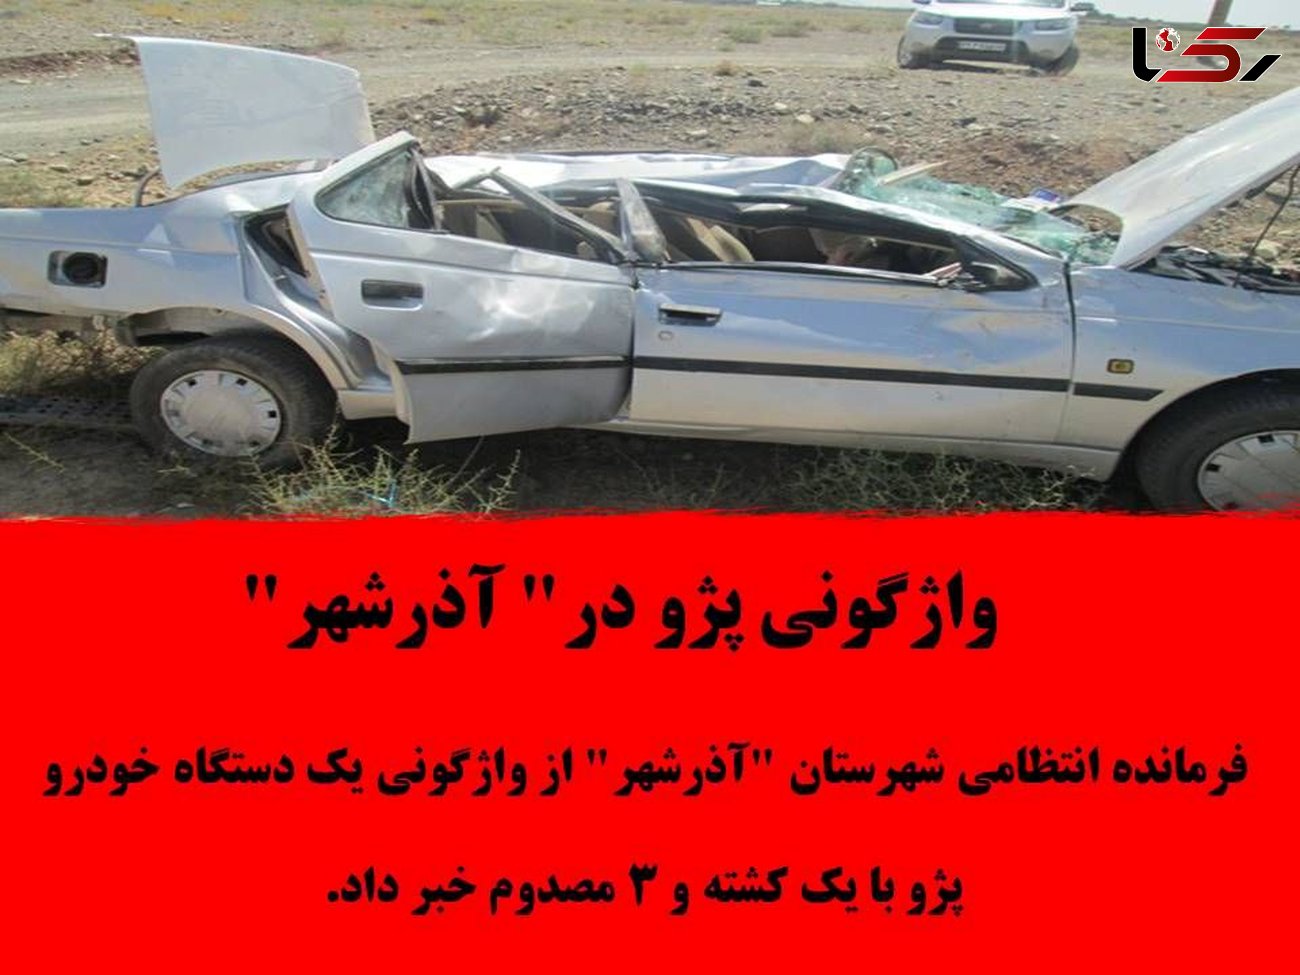 واژگونی پژو در آذرشهر